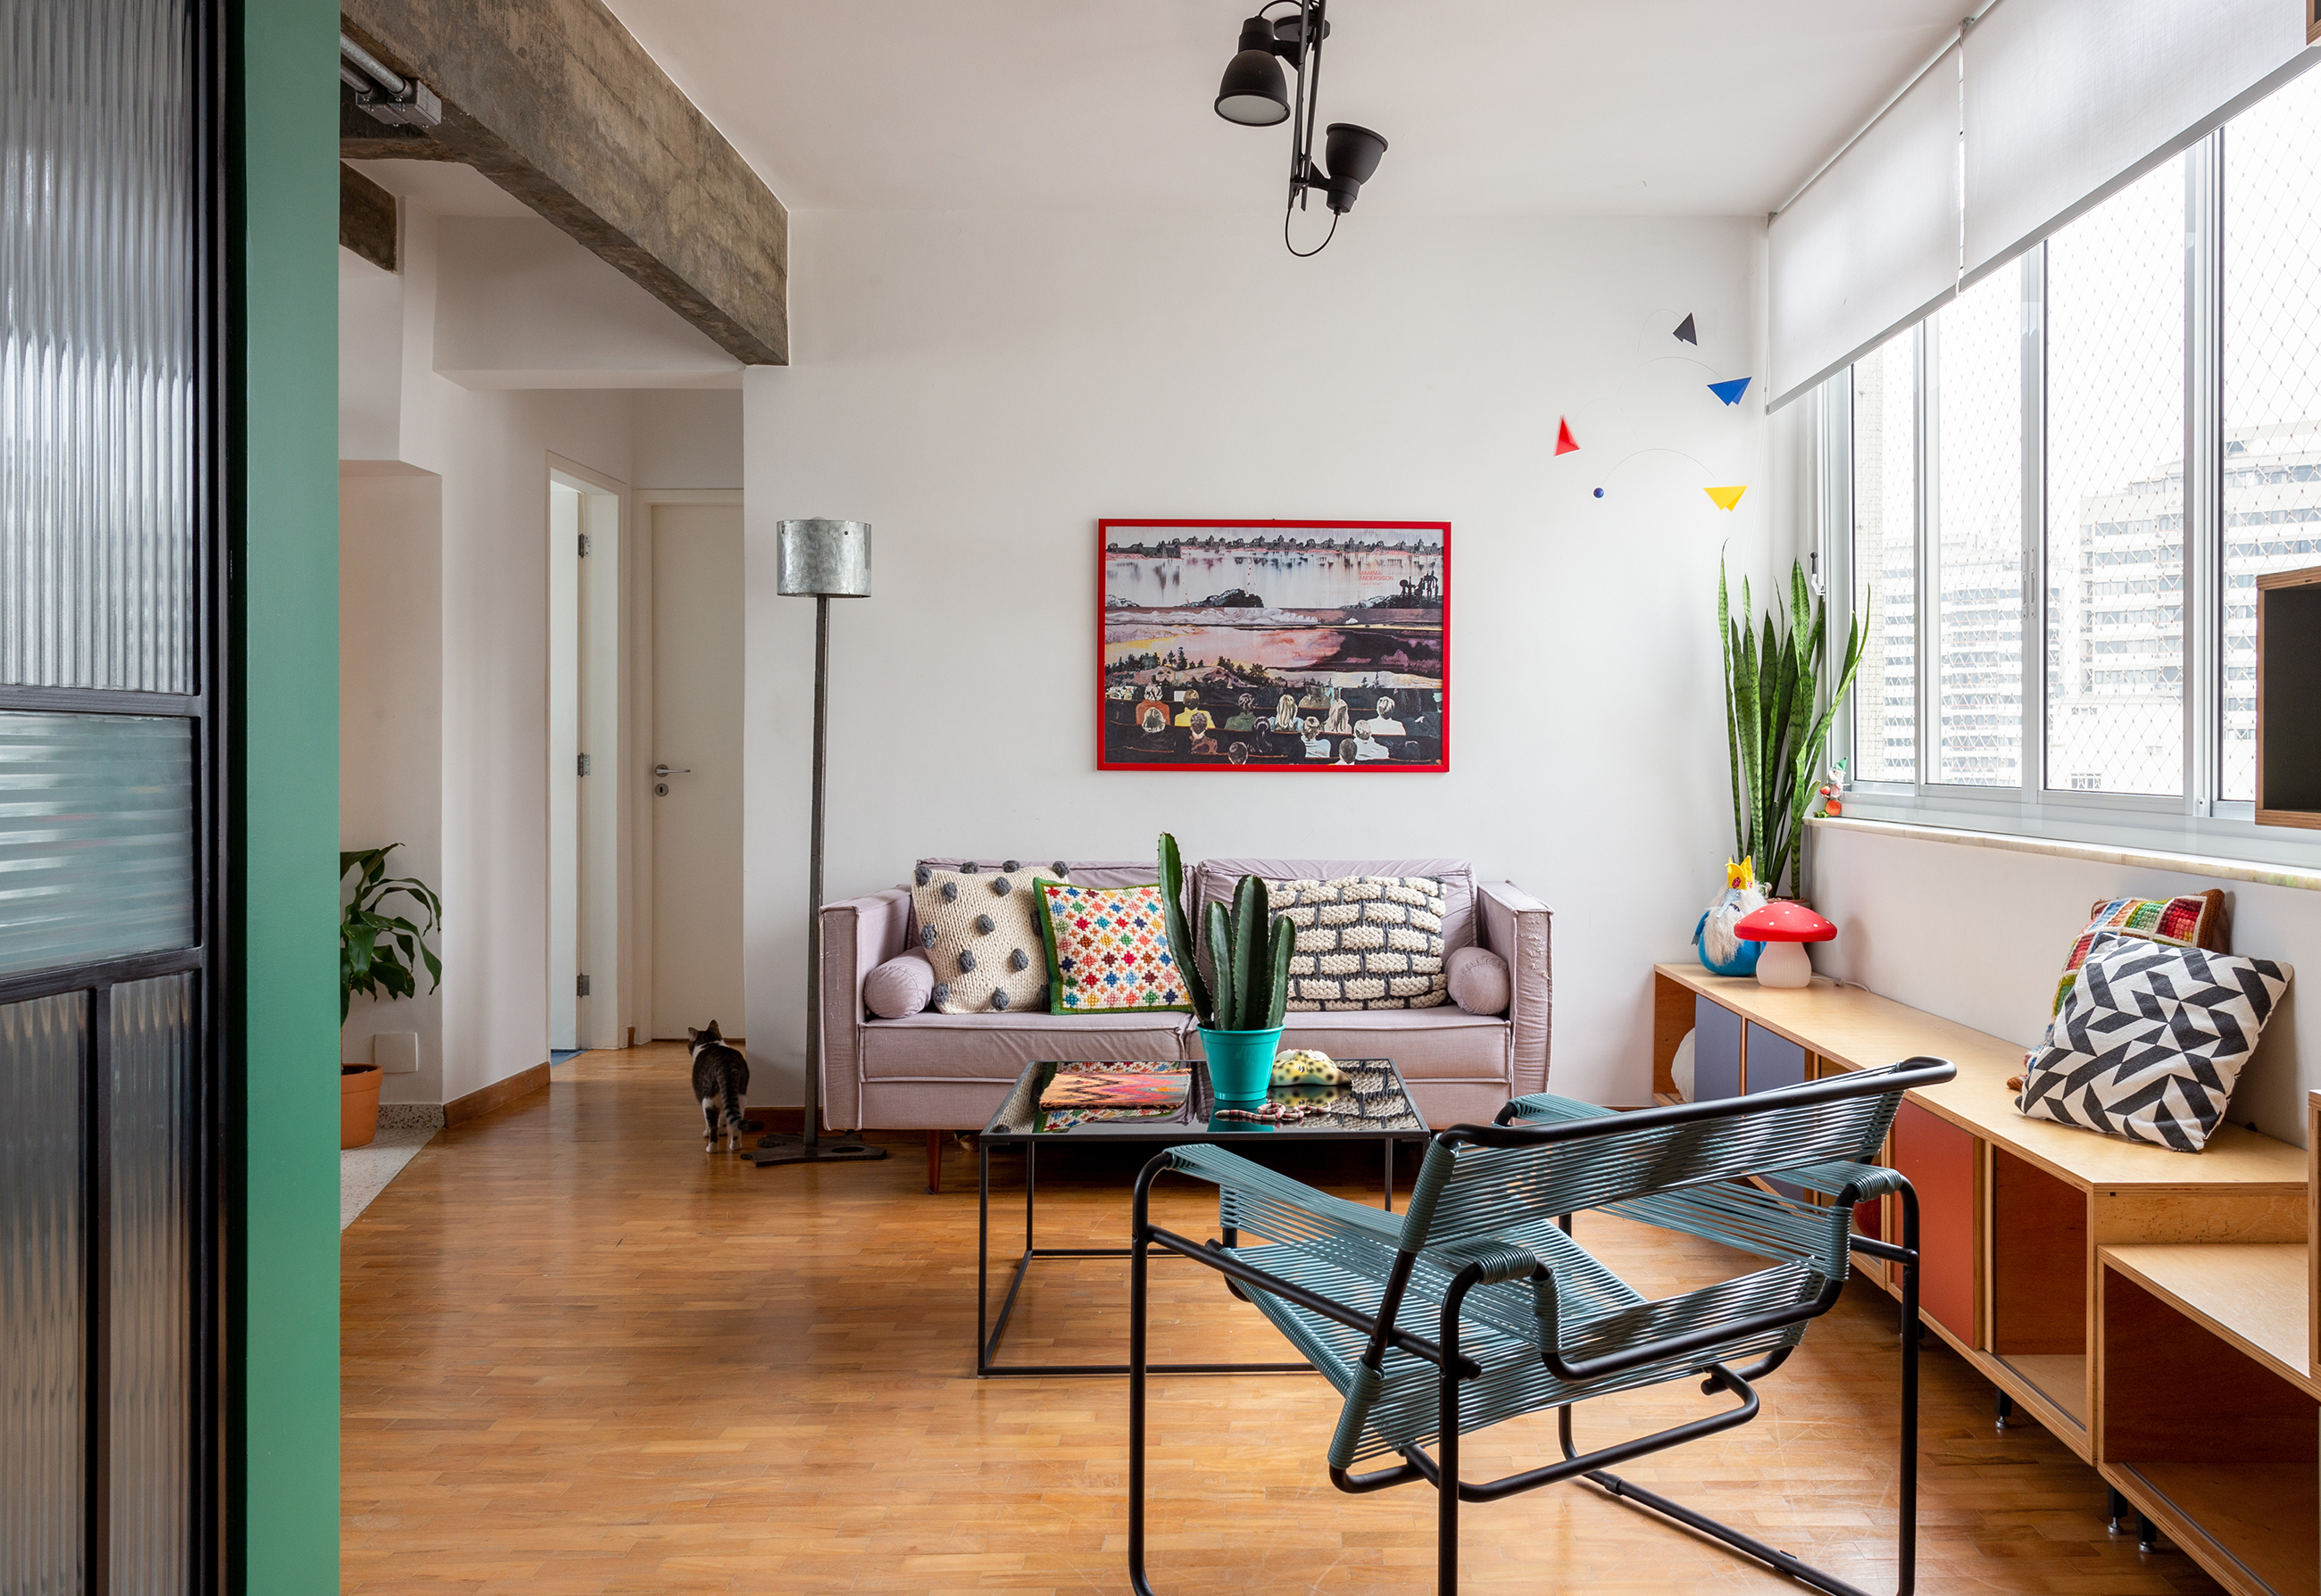 Apartamento moderno mobiliado colorido marcenaria